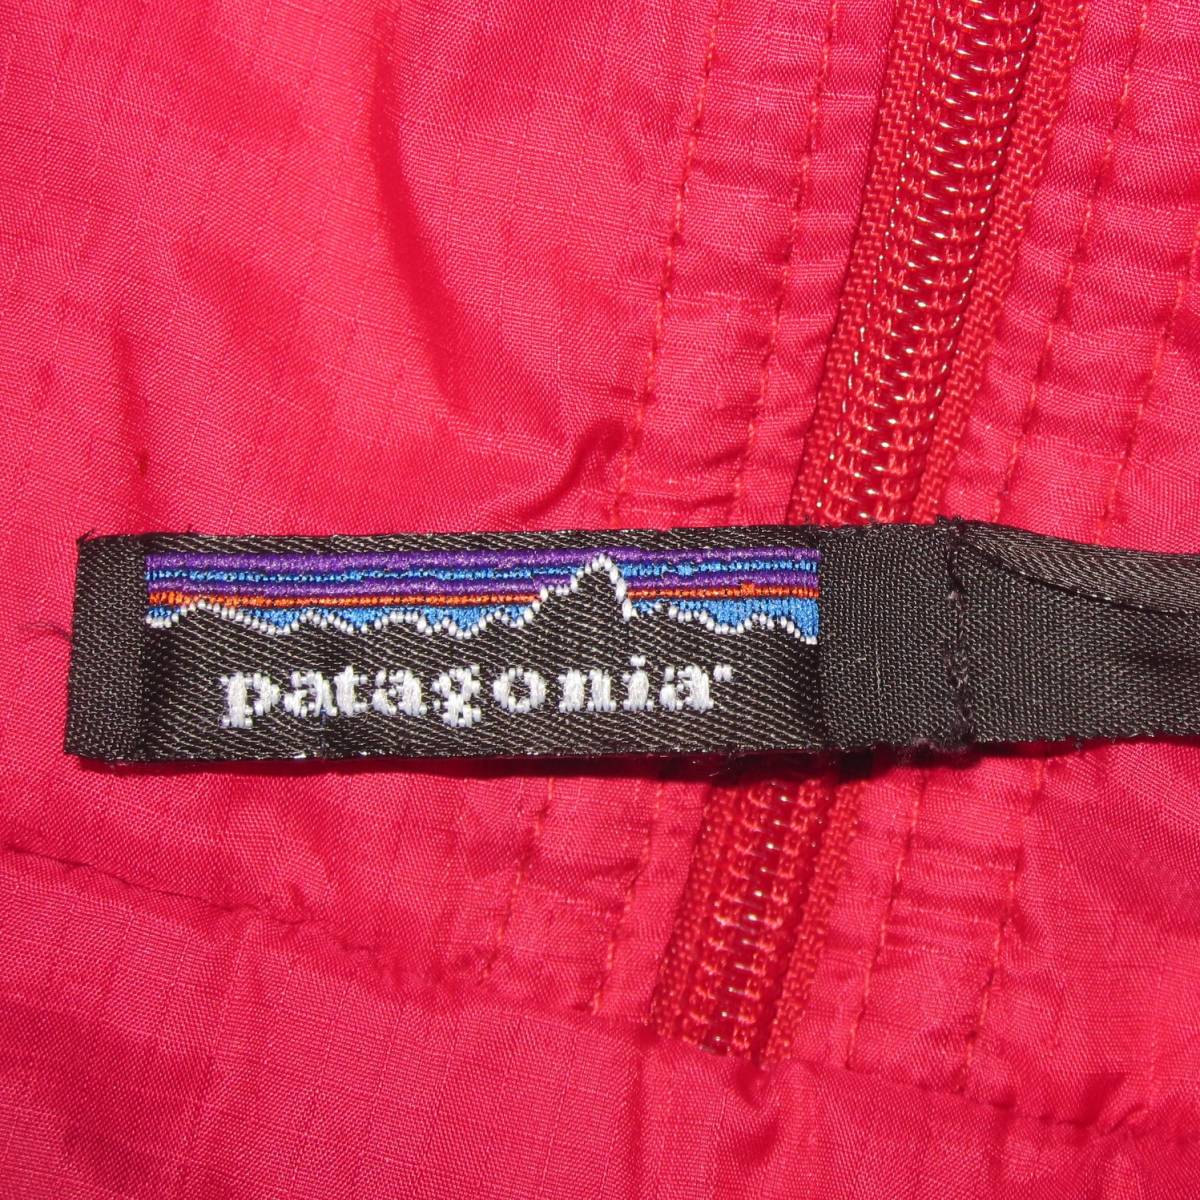 *90s Patagonia пуховка мяч лучший (XL) / patagonia puffball vest / USA производства / 90s / vintage